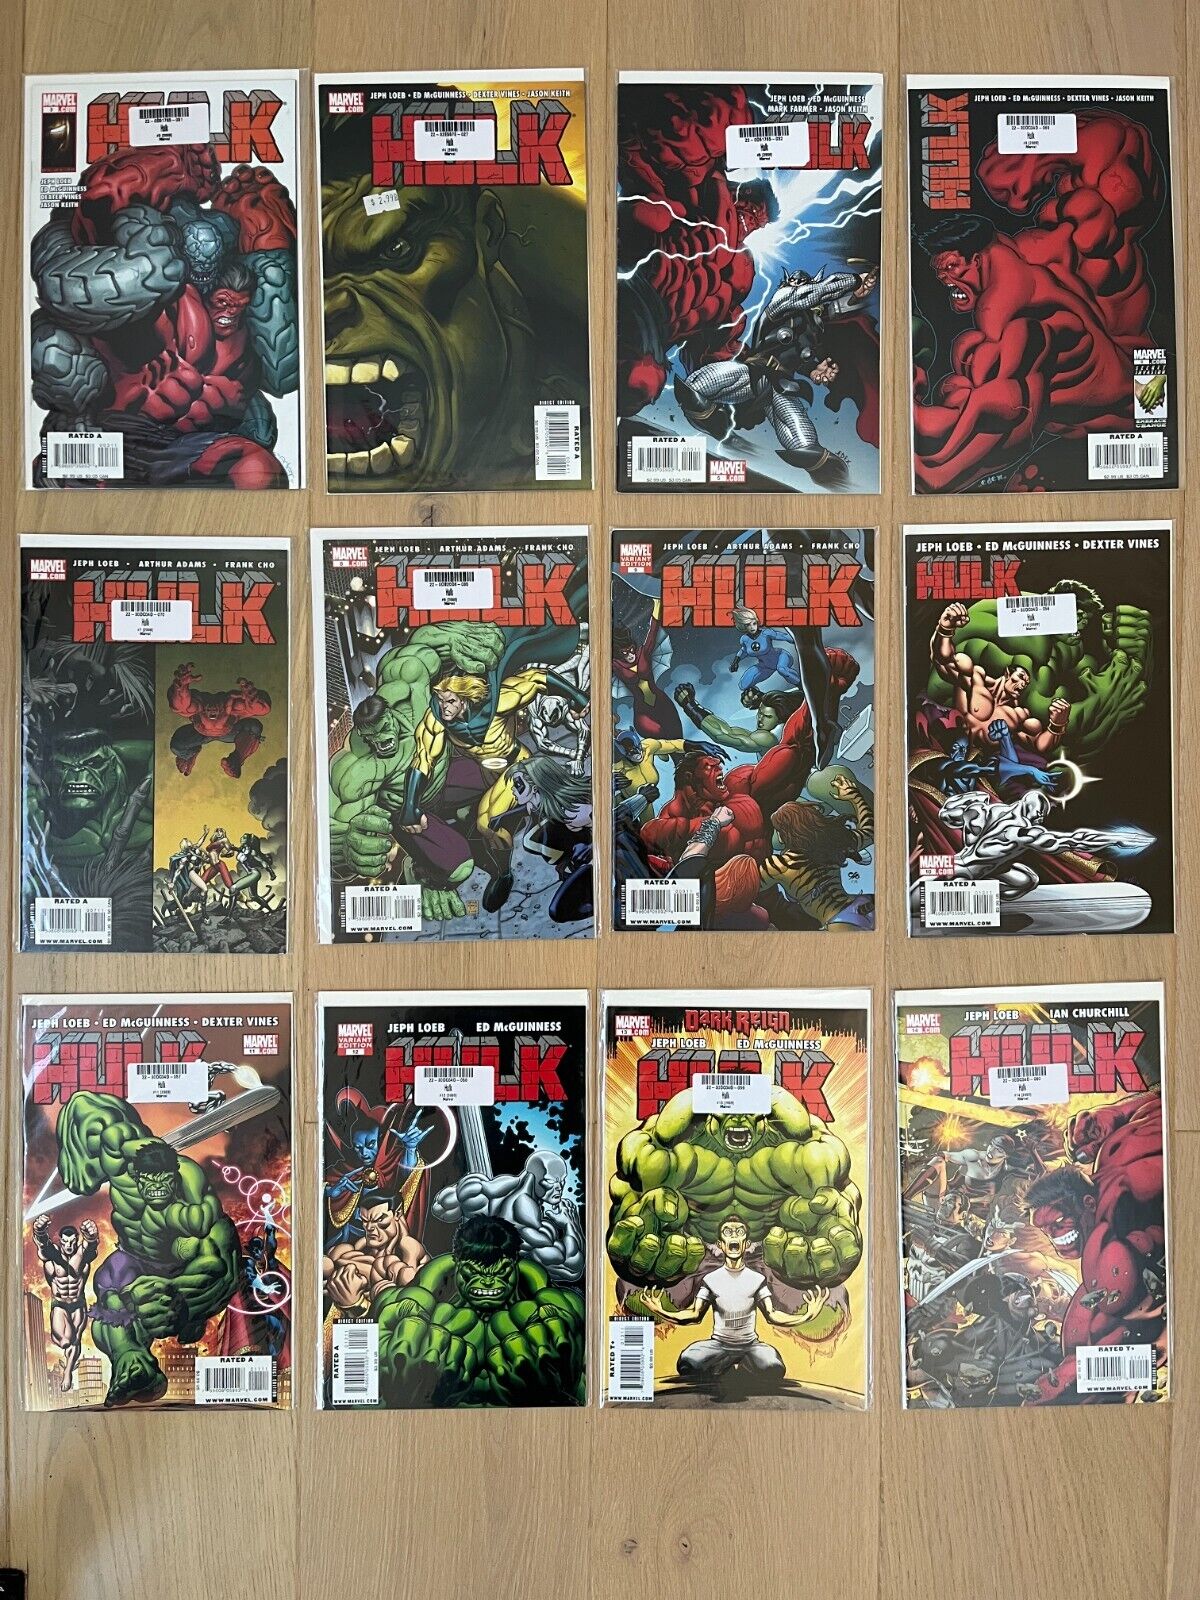 Hulk 12 issue lot - #3, 4(Green), 5-14 + variants Red Hulk Loeb McGuinness Cho